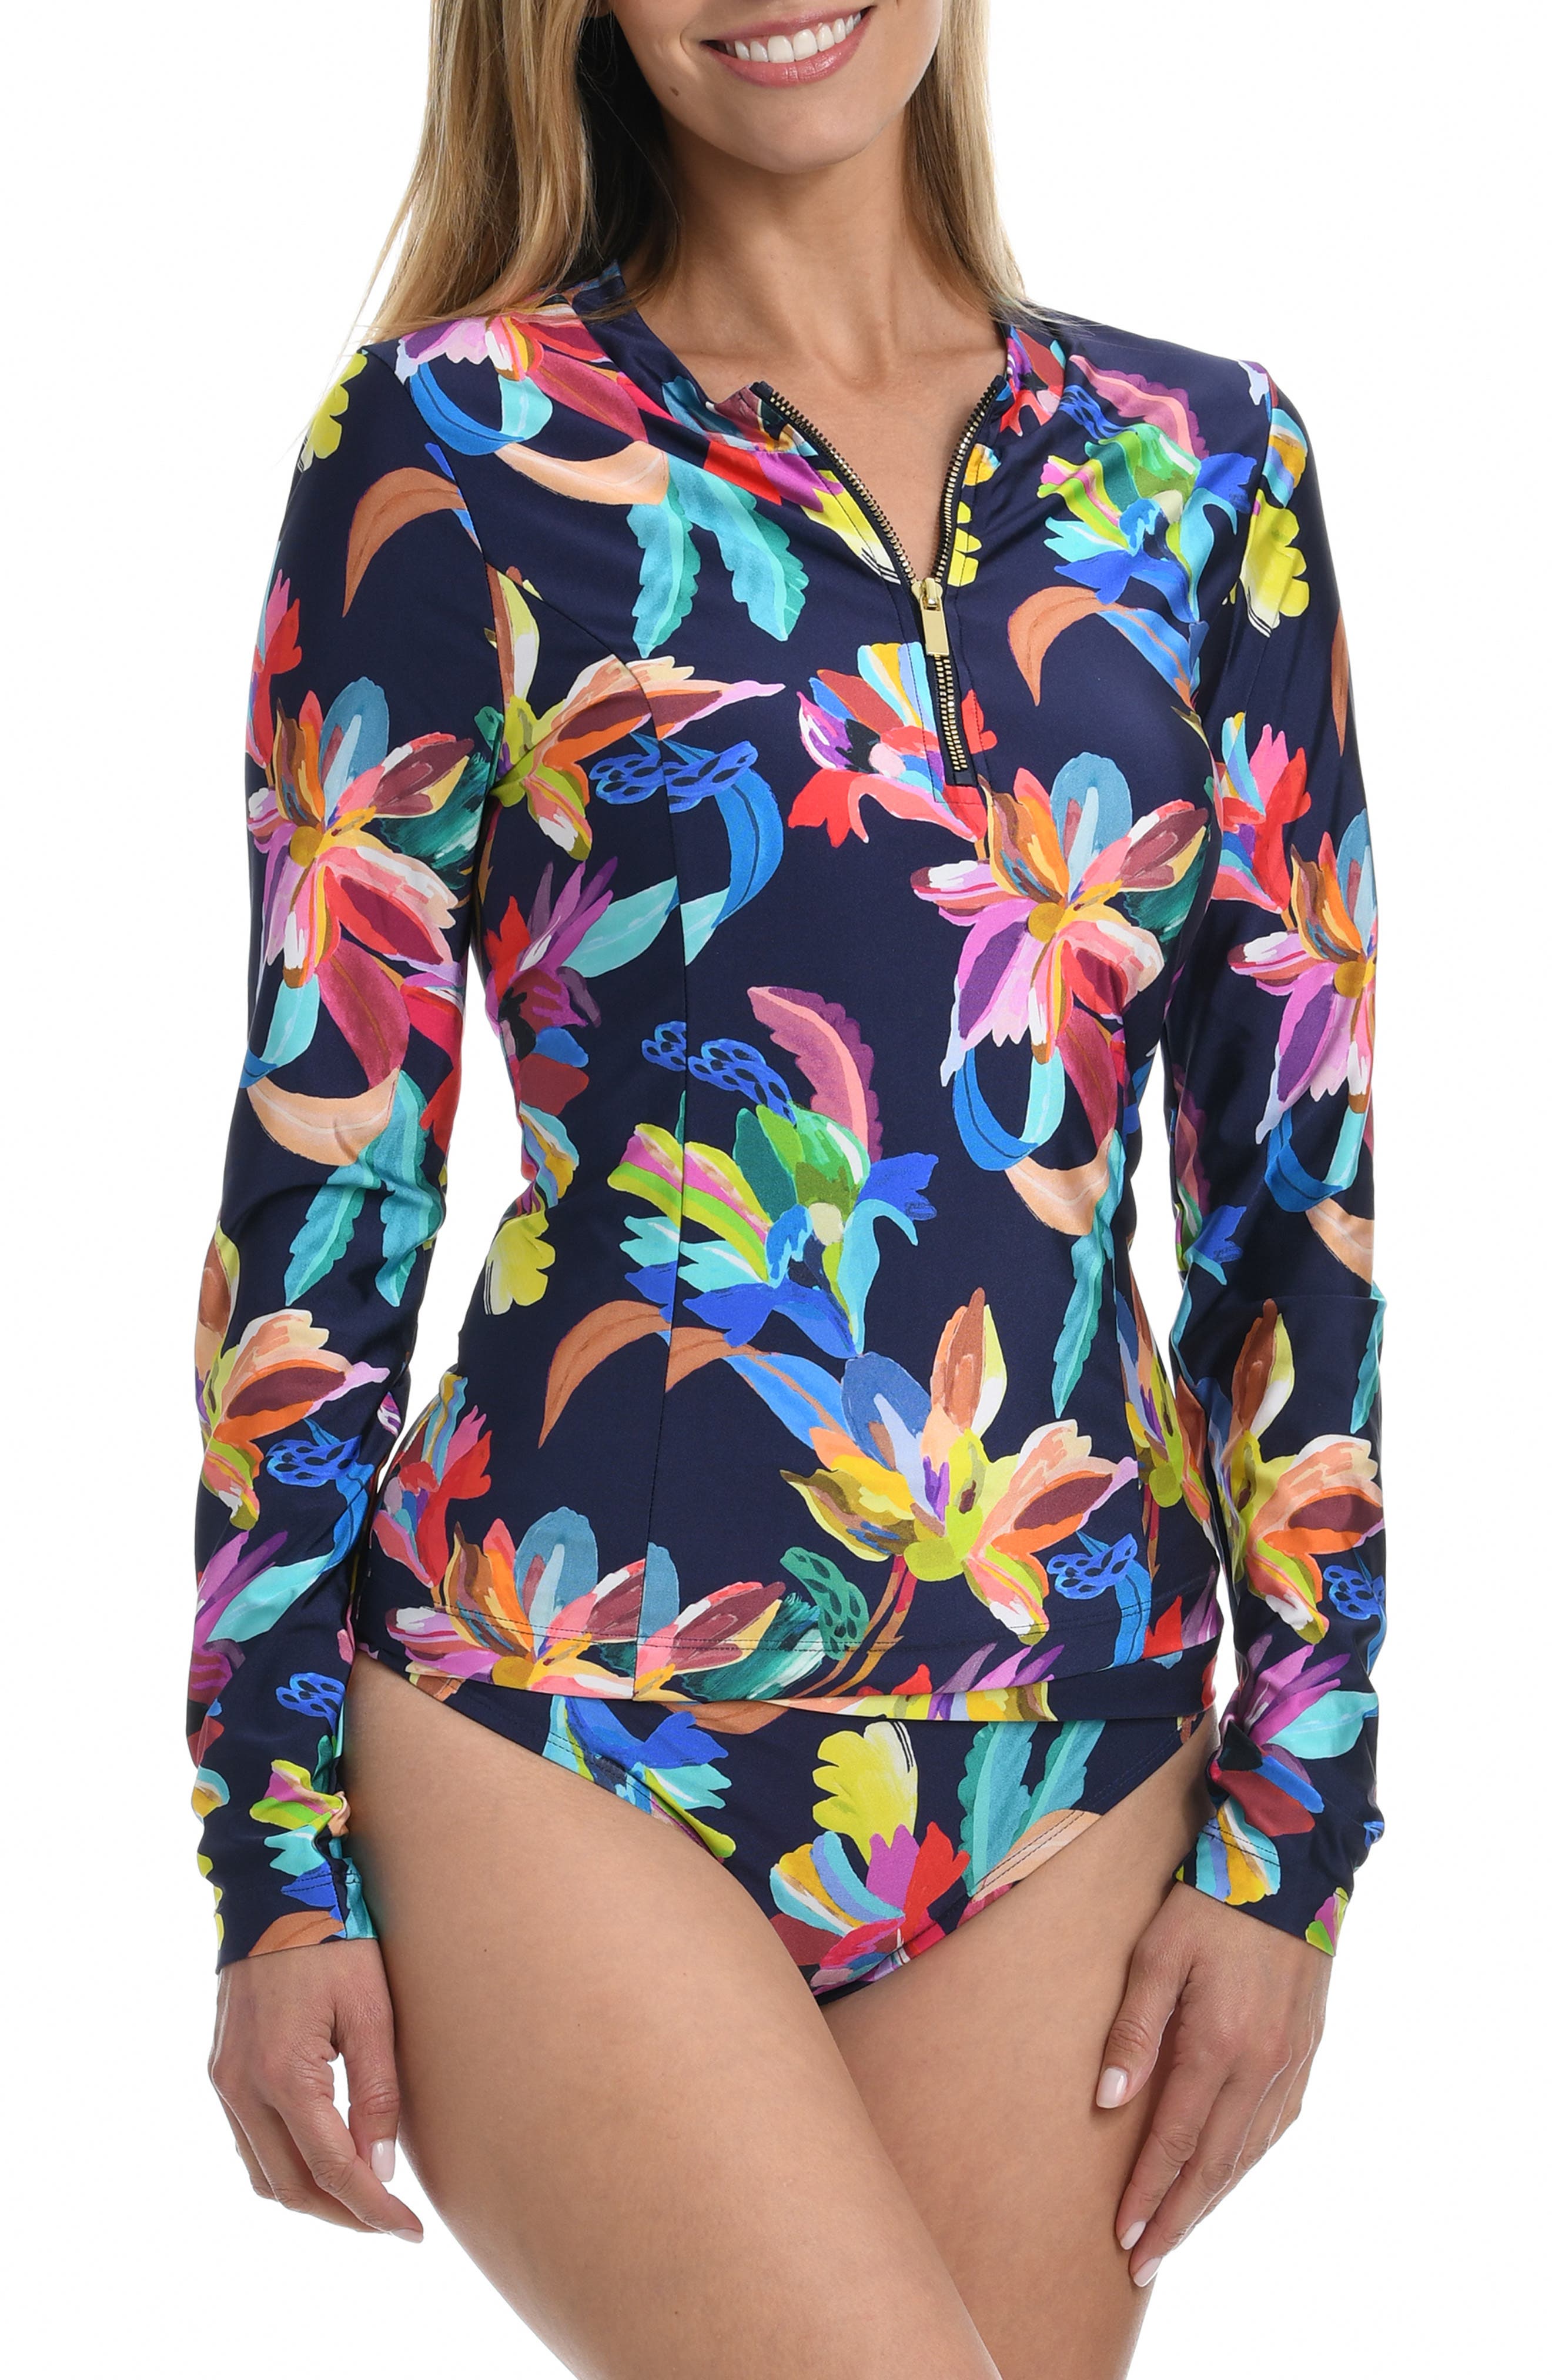 Z-one Women New Flower Print Athletic Tops Swimsuits Zipped Long Sleeve Tankini Top Sports Swimwear